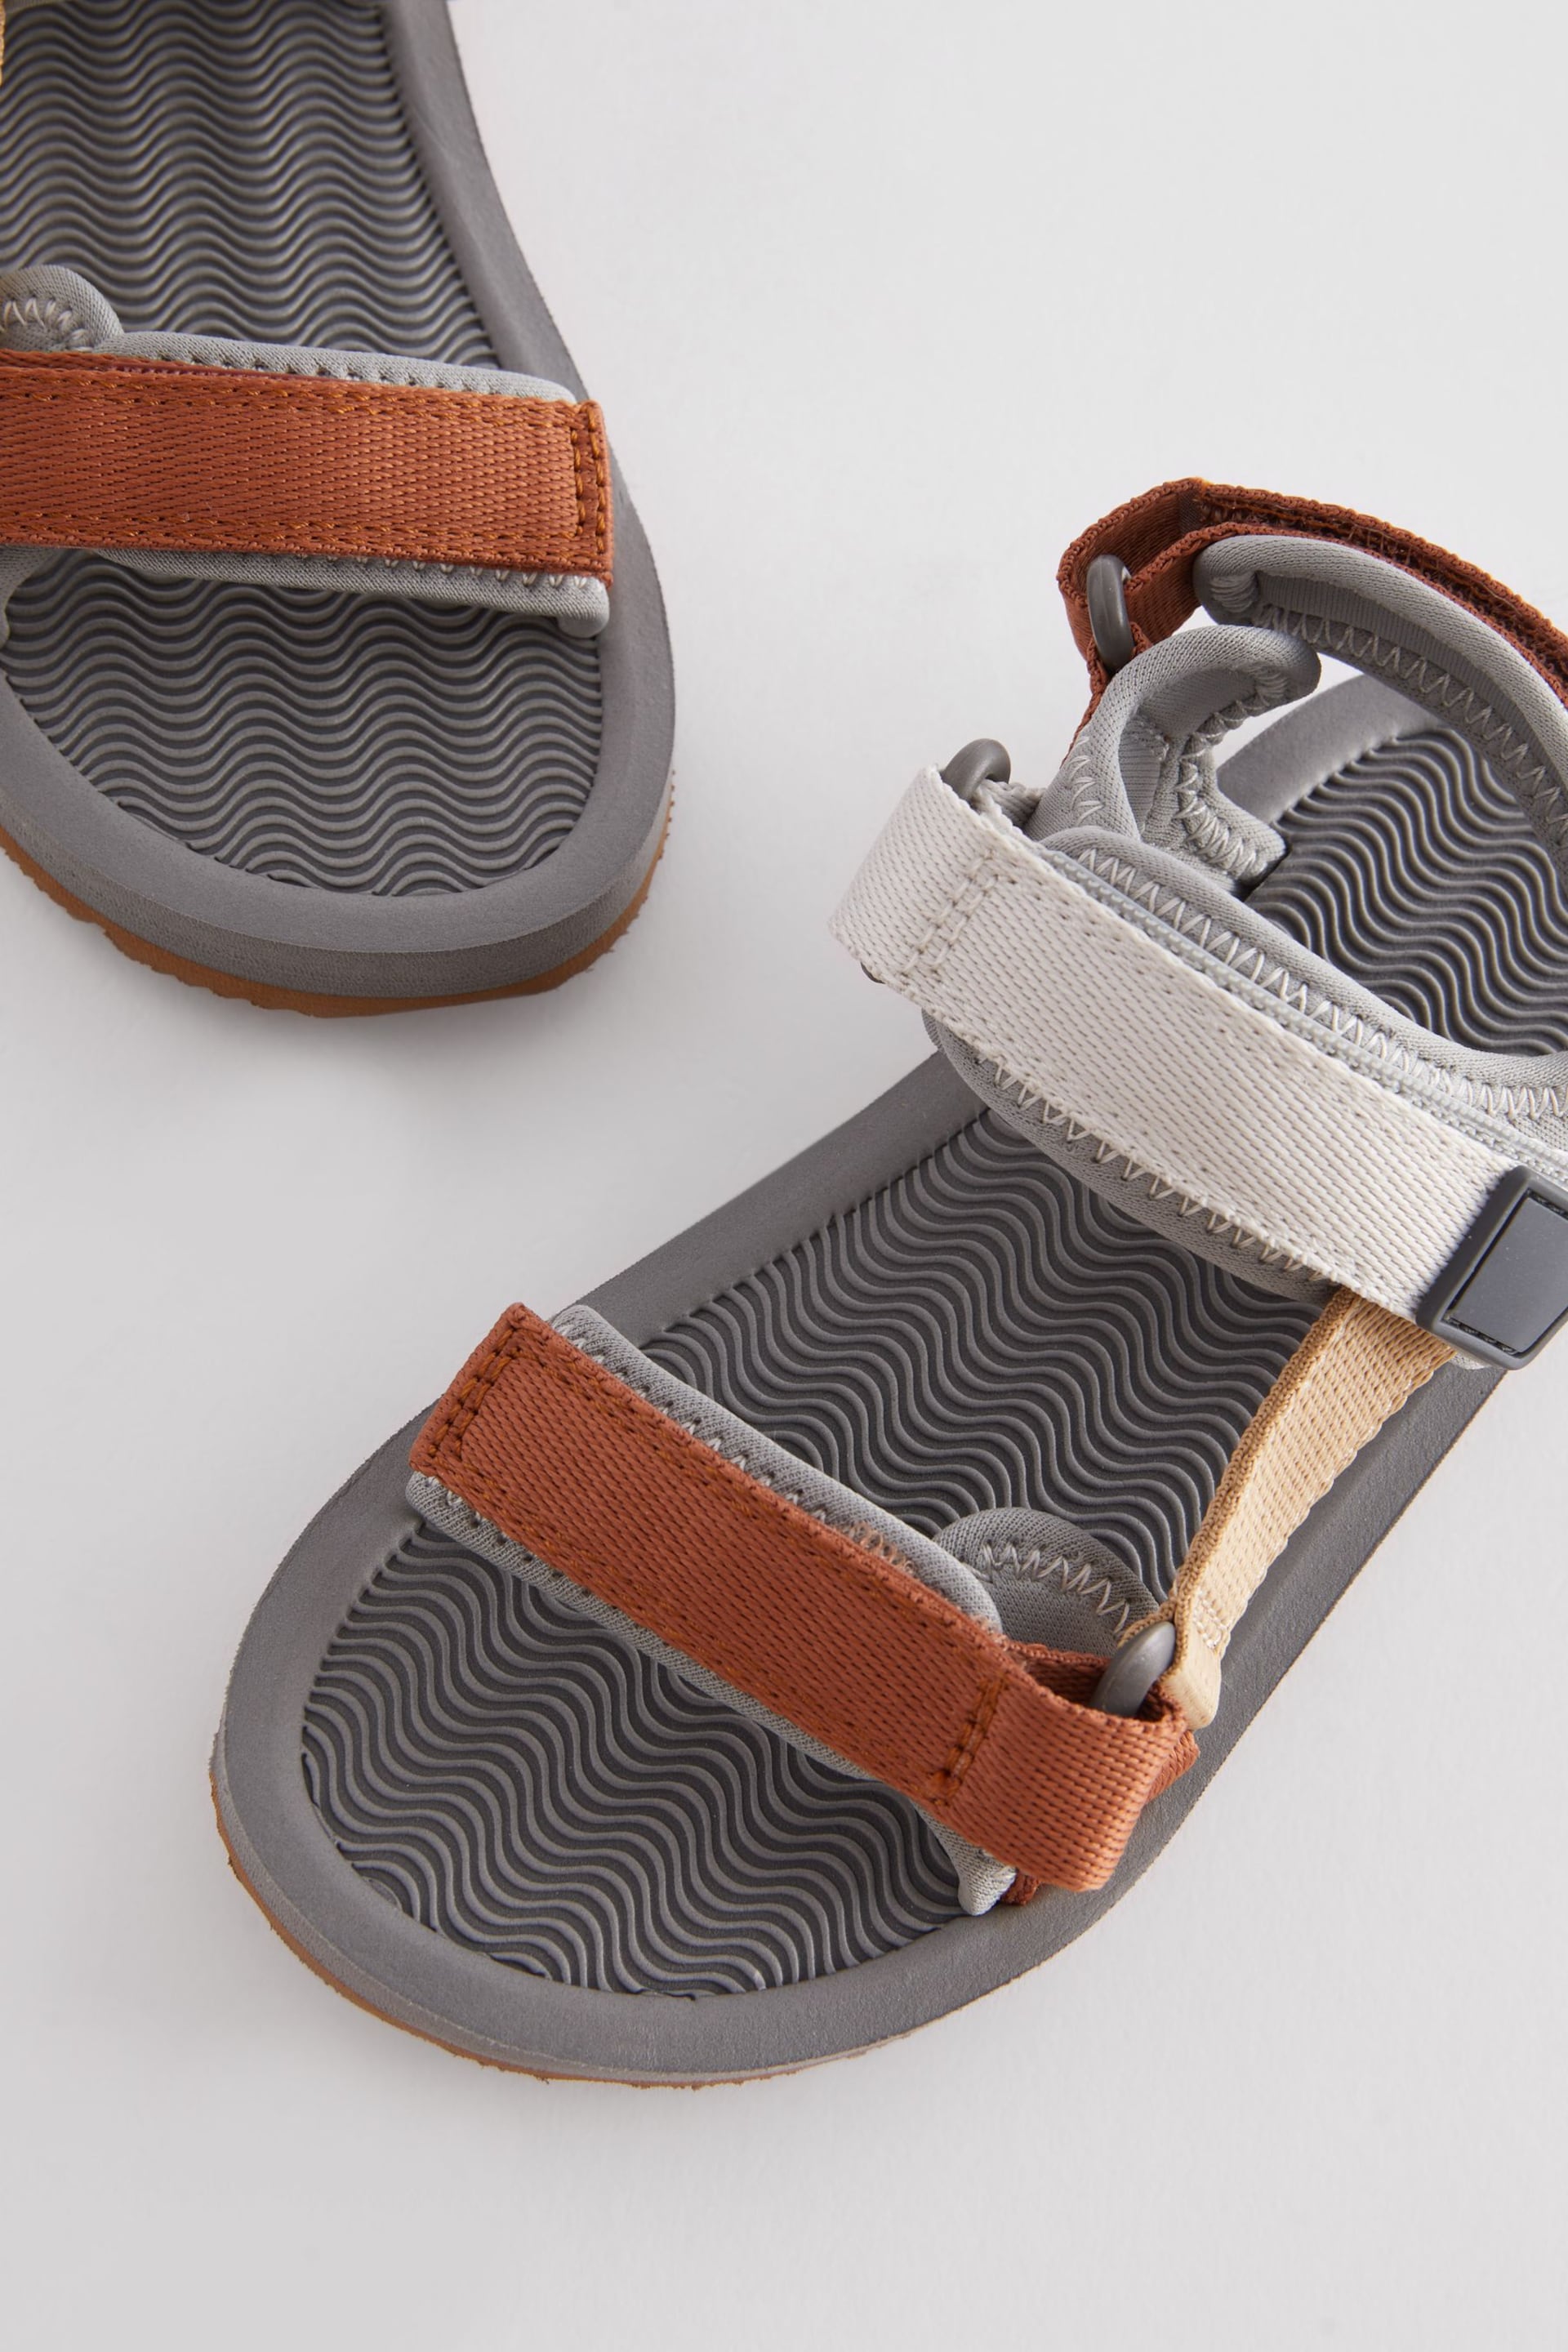 Tan/Grey Trekker Sandals - Image 5 of 5